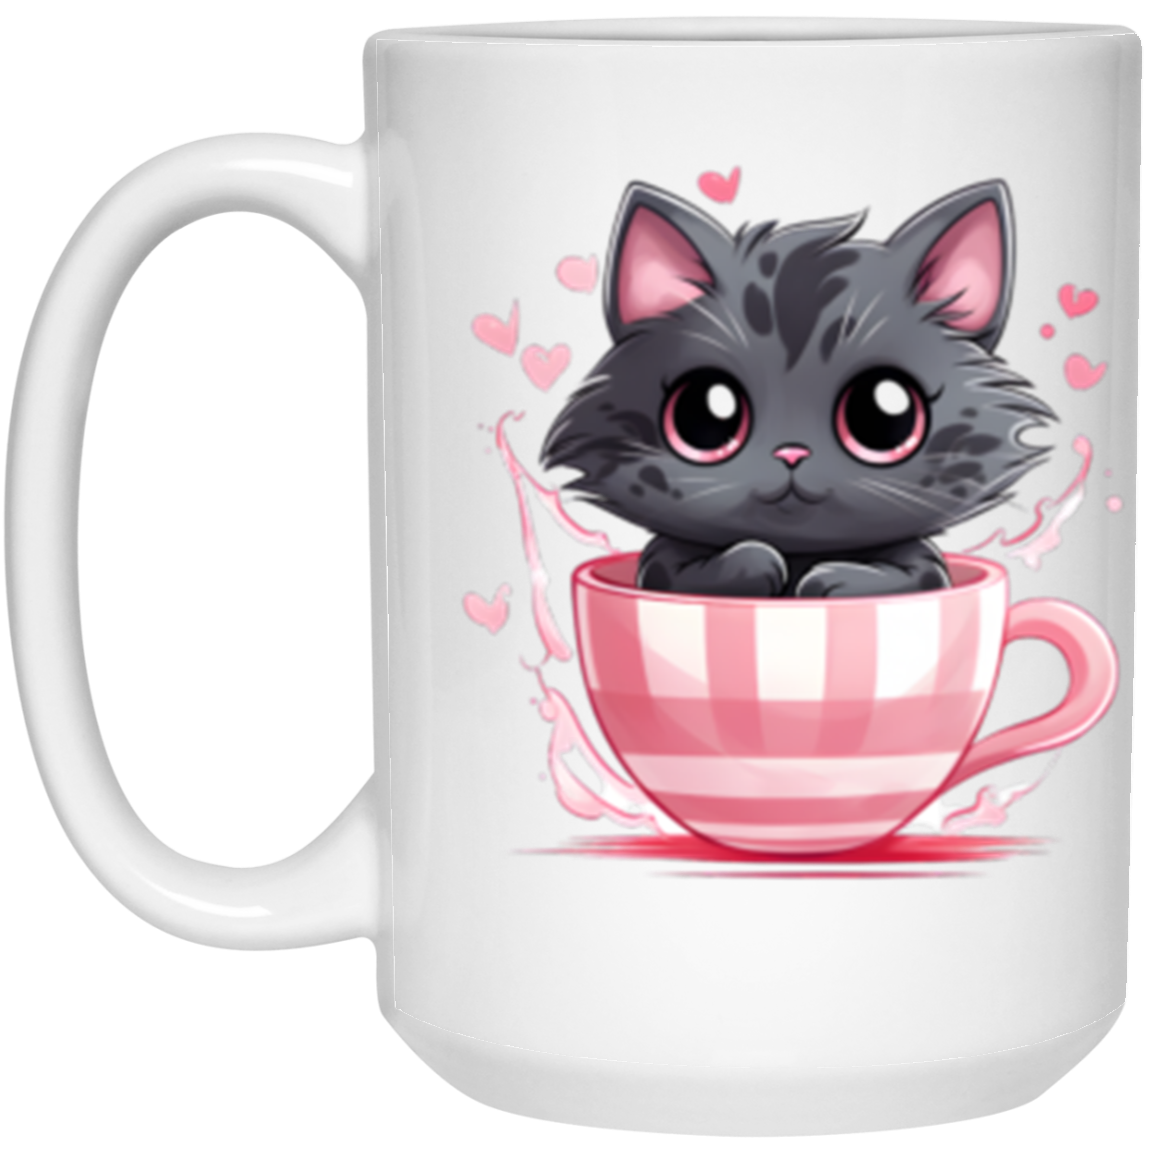 Cute Kitty, taza de té, envoltura completa - 11 y 15 oz. Taza blanca